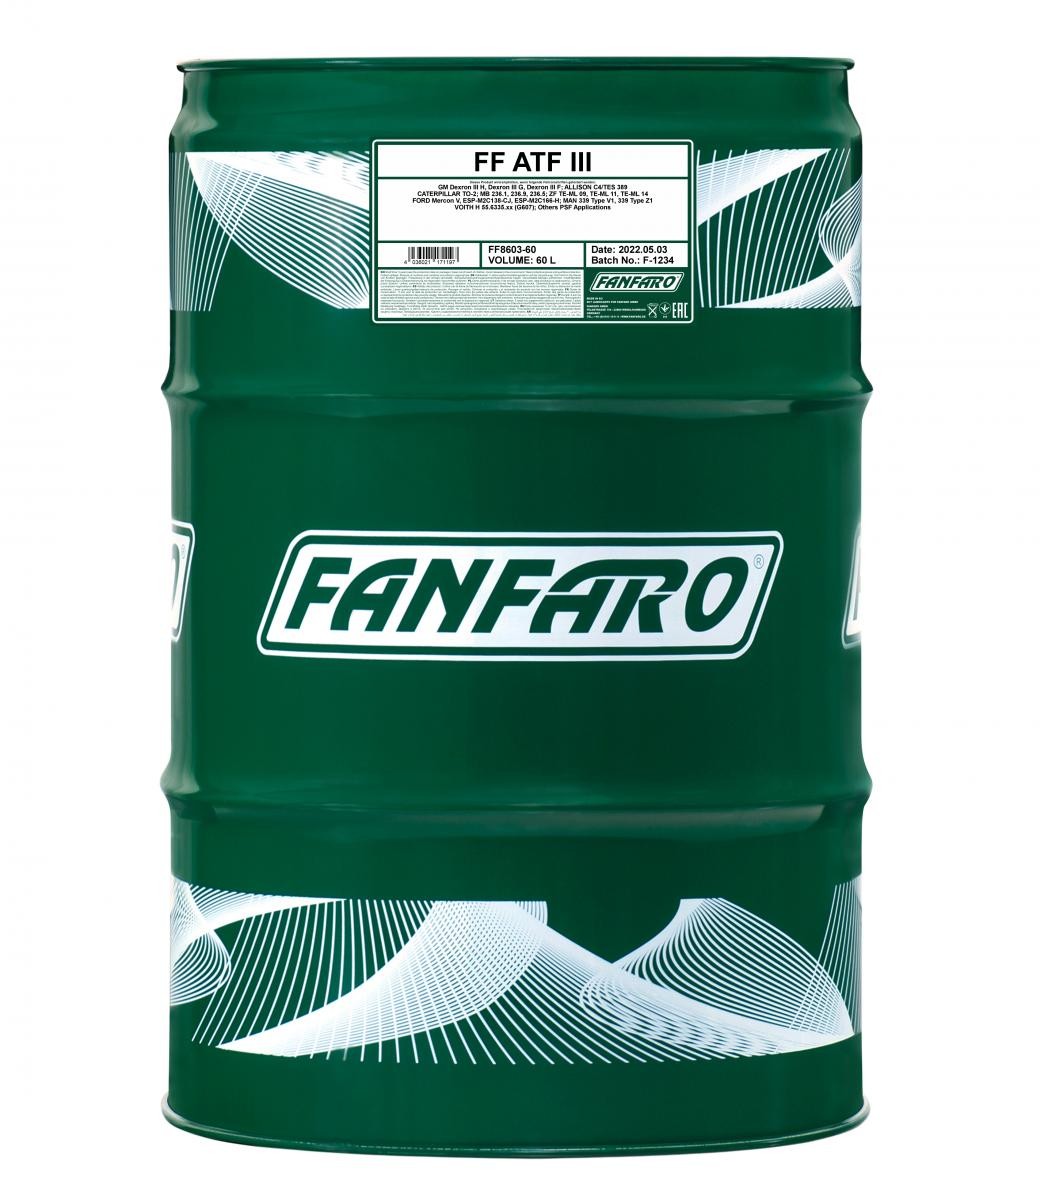 FF8603-60 FANFARO Automatikgetriebeöl DAF LF 55